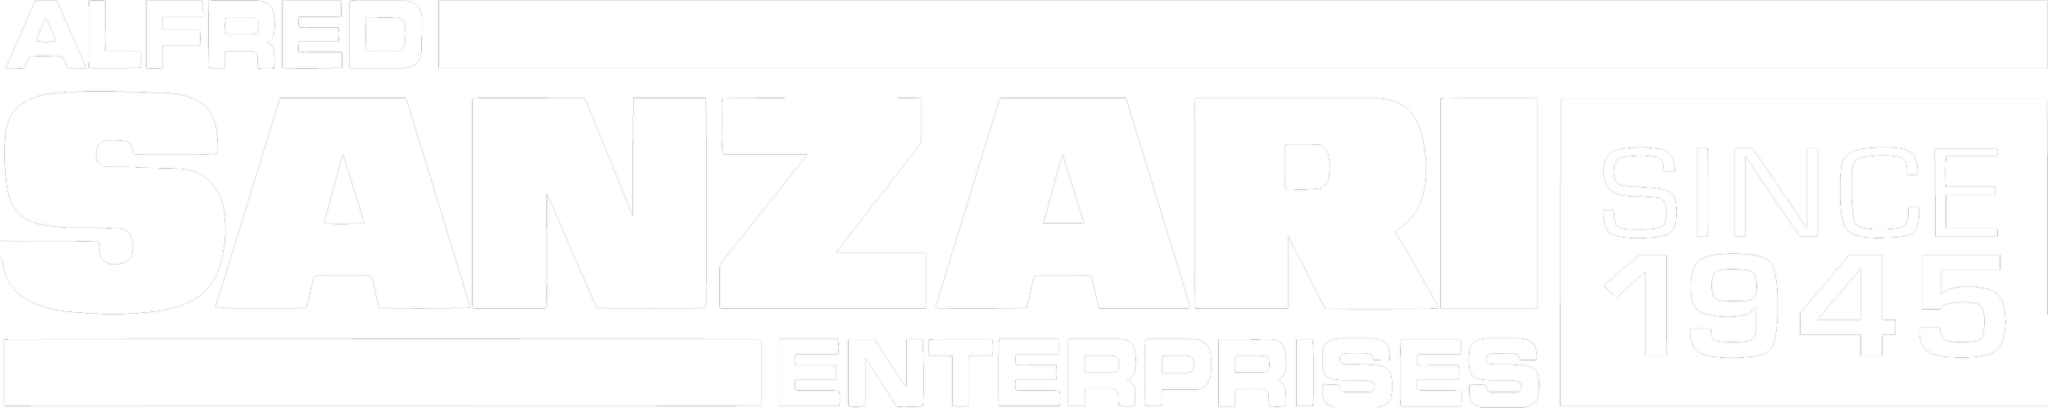 Alfred Sanzari Enterprises - Since 1945